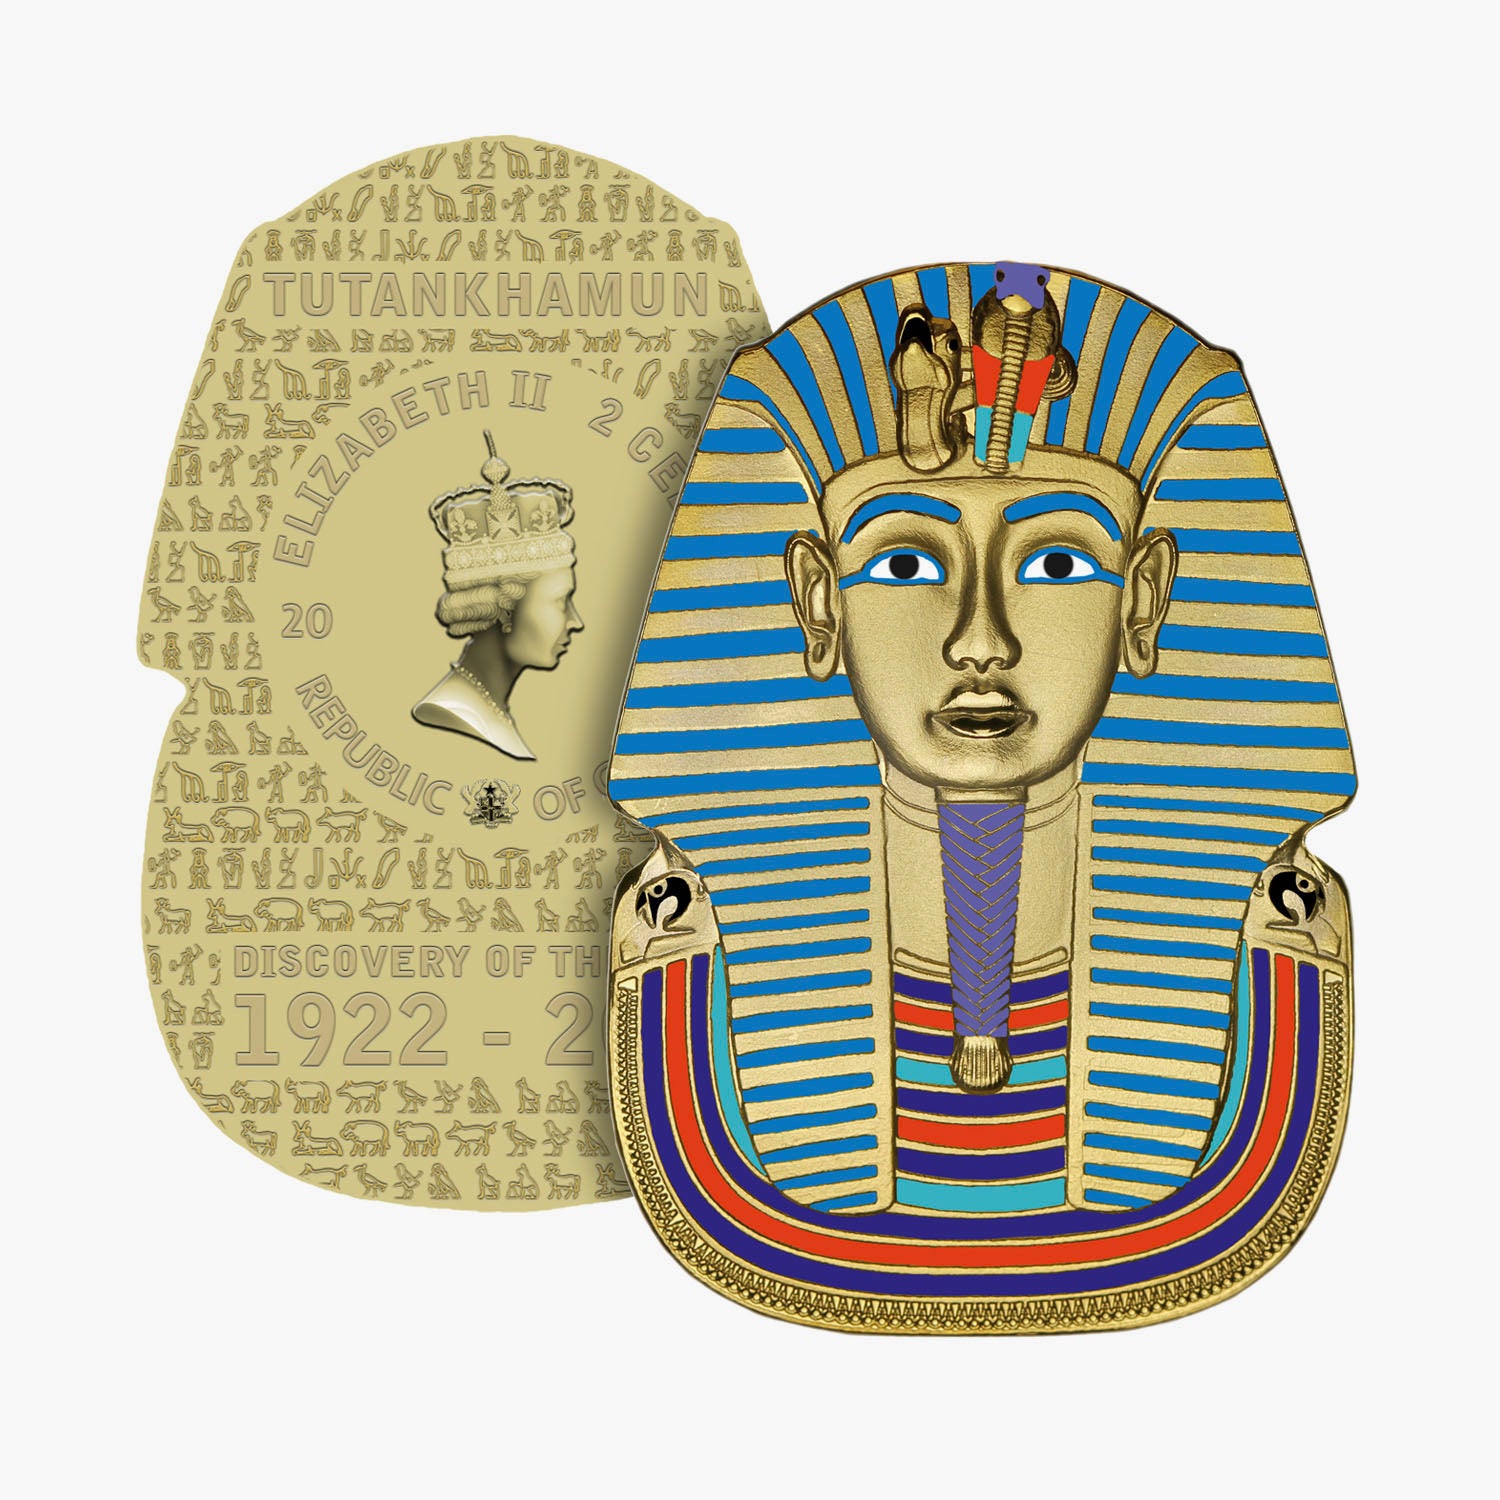 The 2022 100th Anniversary Tutankhamun Mask Coin